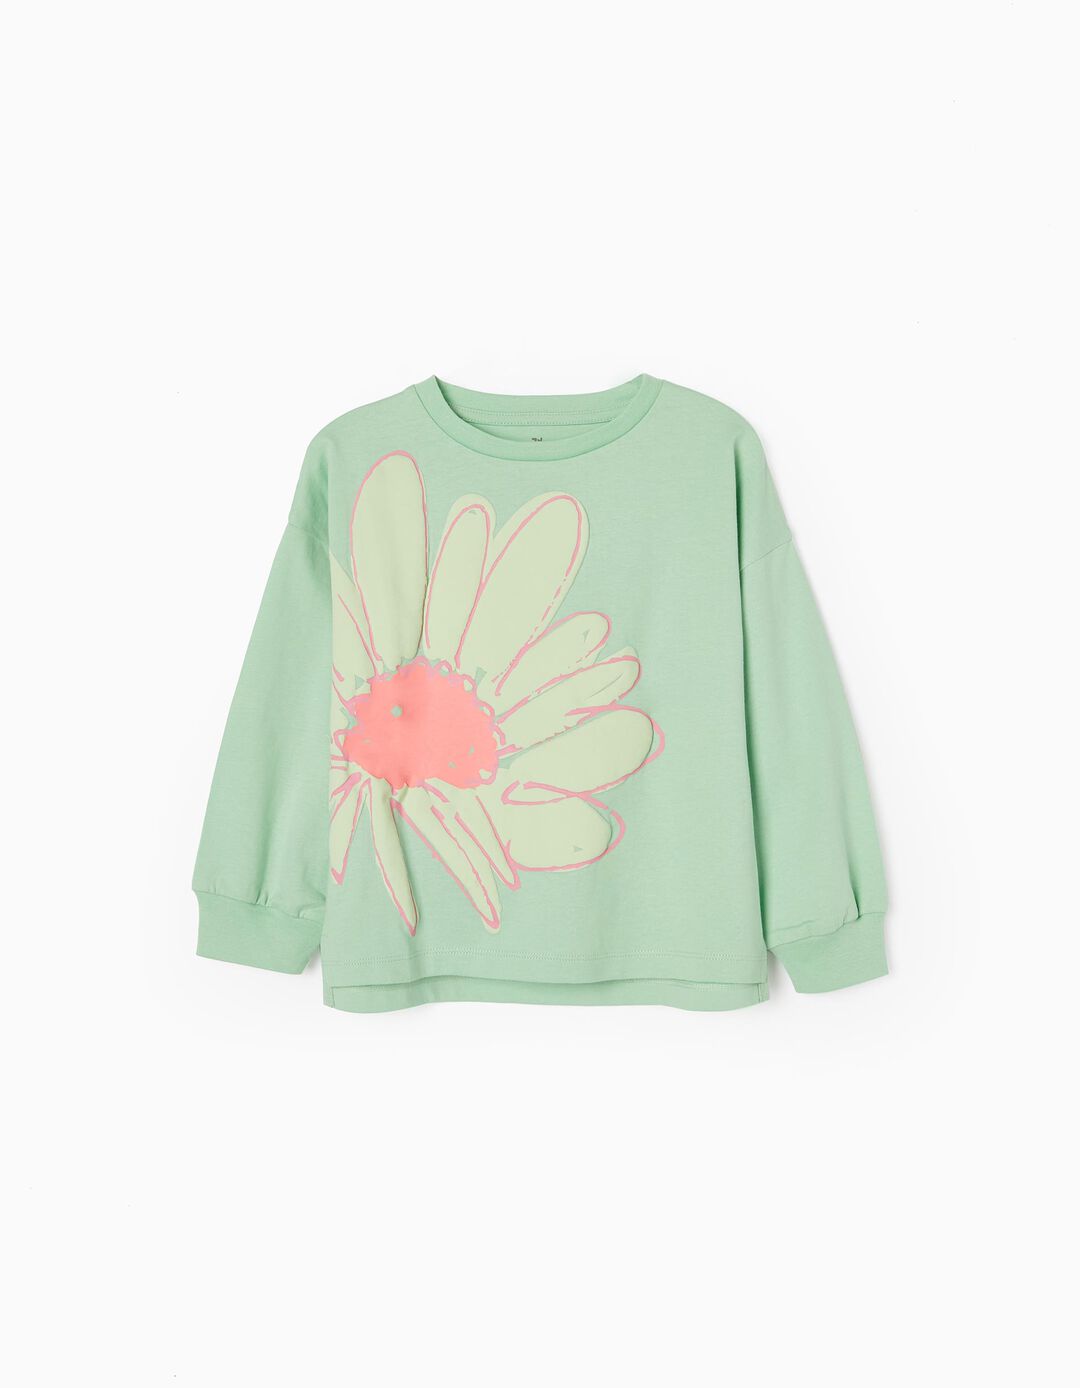 Long Sleeve Cotton T-shirt for Girls 'Flower', Green